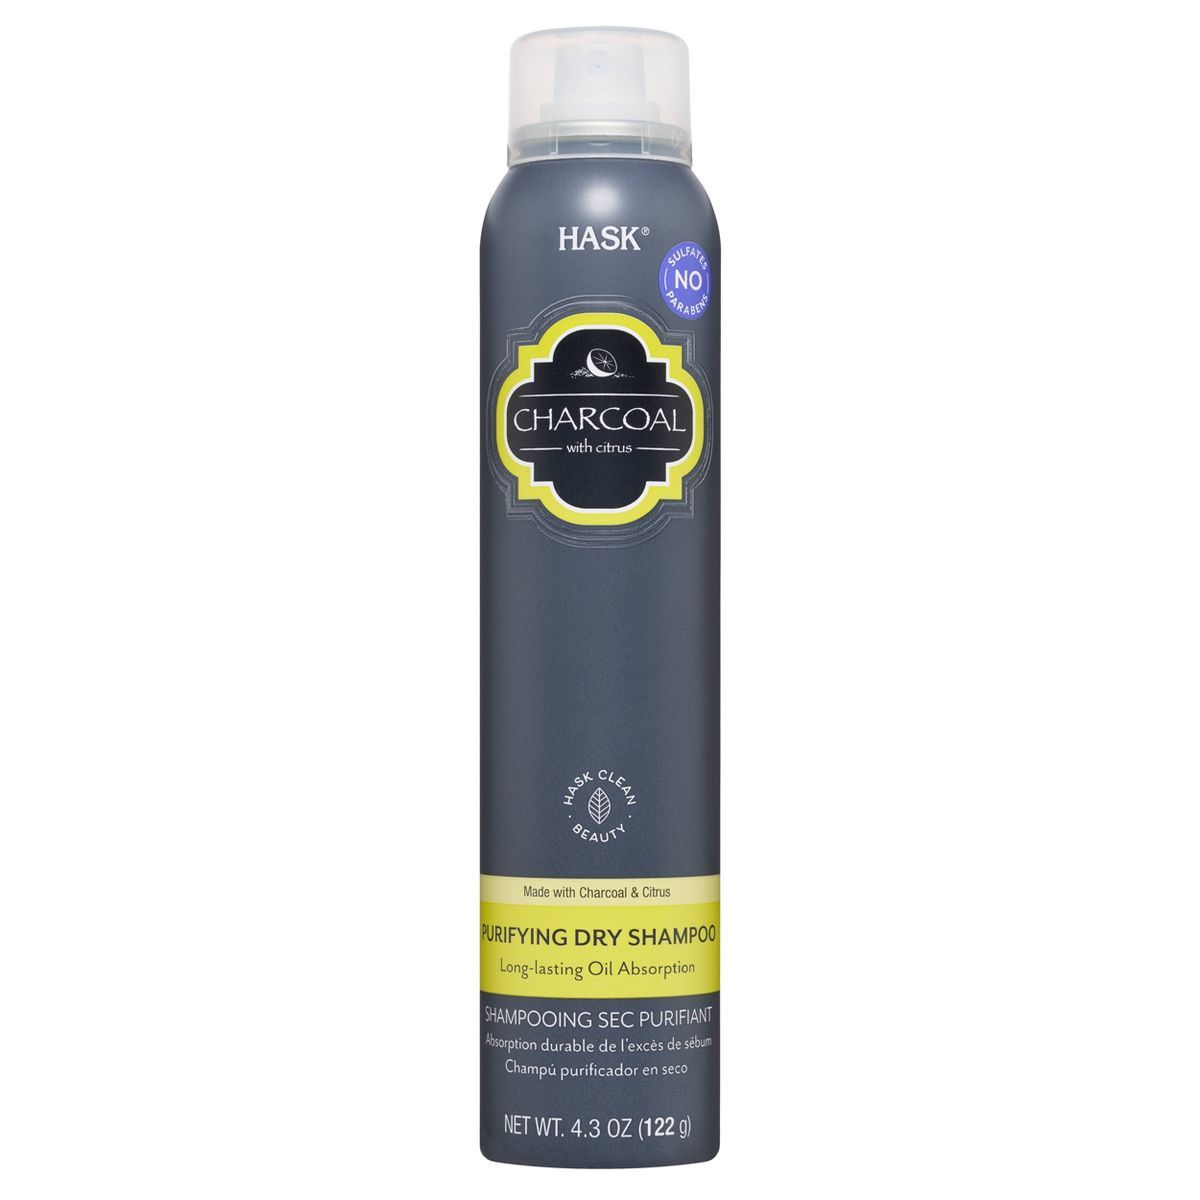 Hask Charcoal Purifying Dry Shampoo - 4.3oz | Target